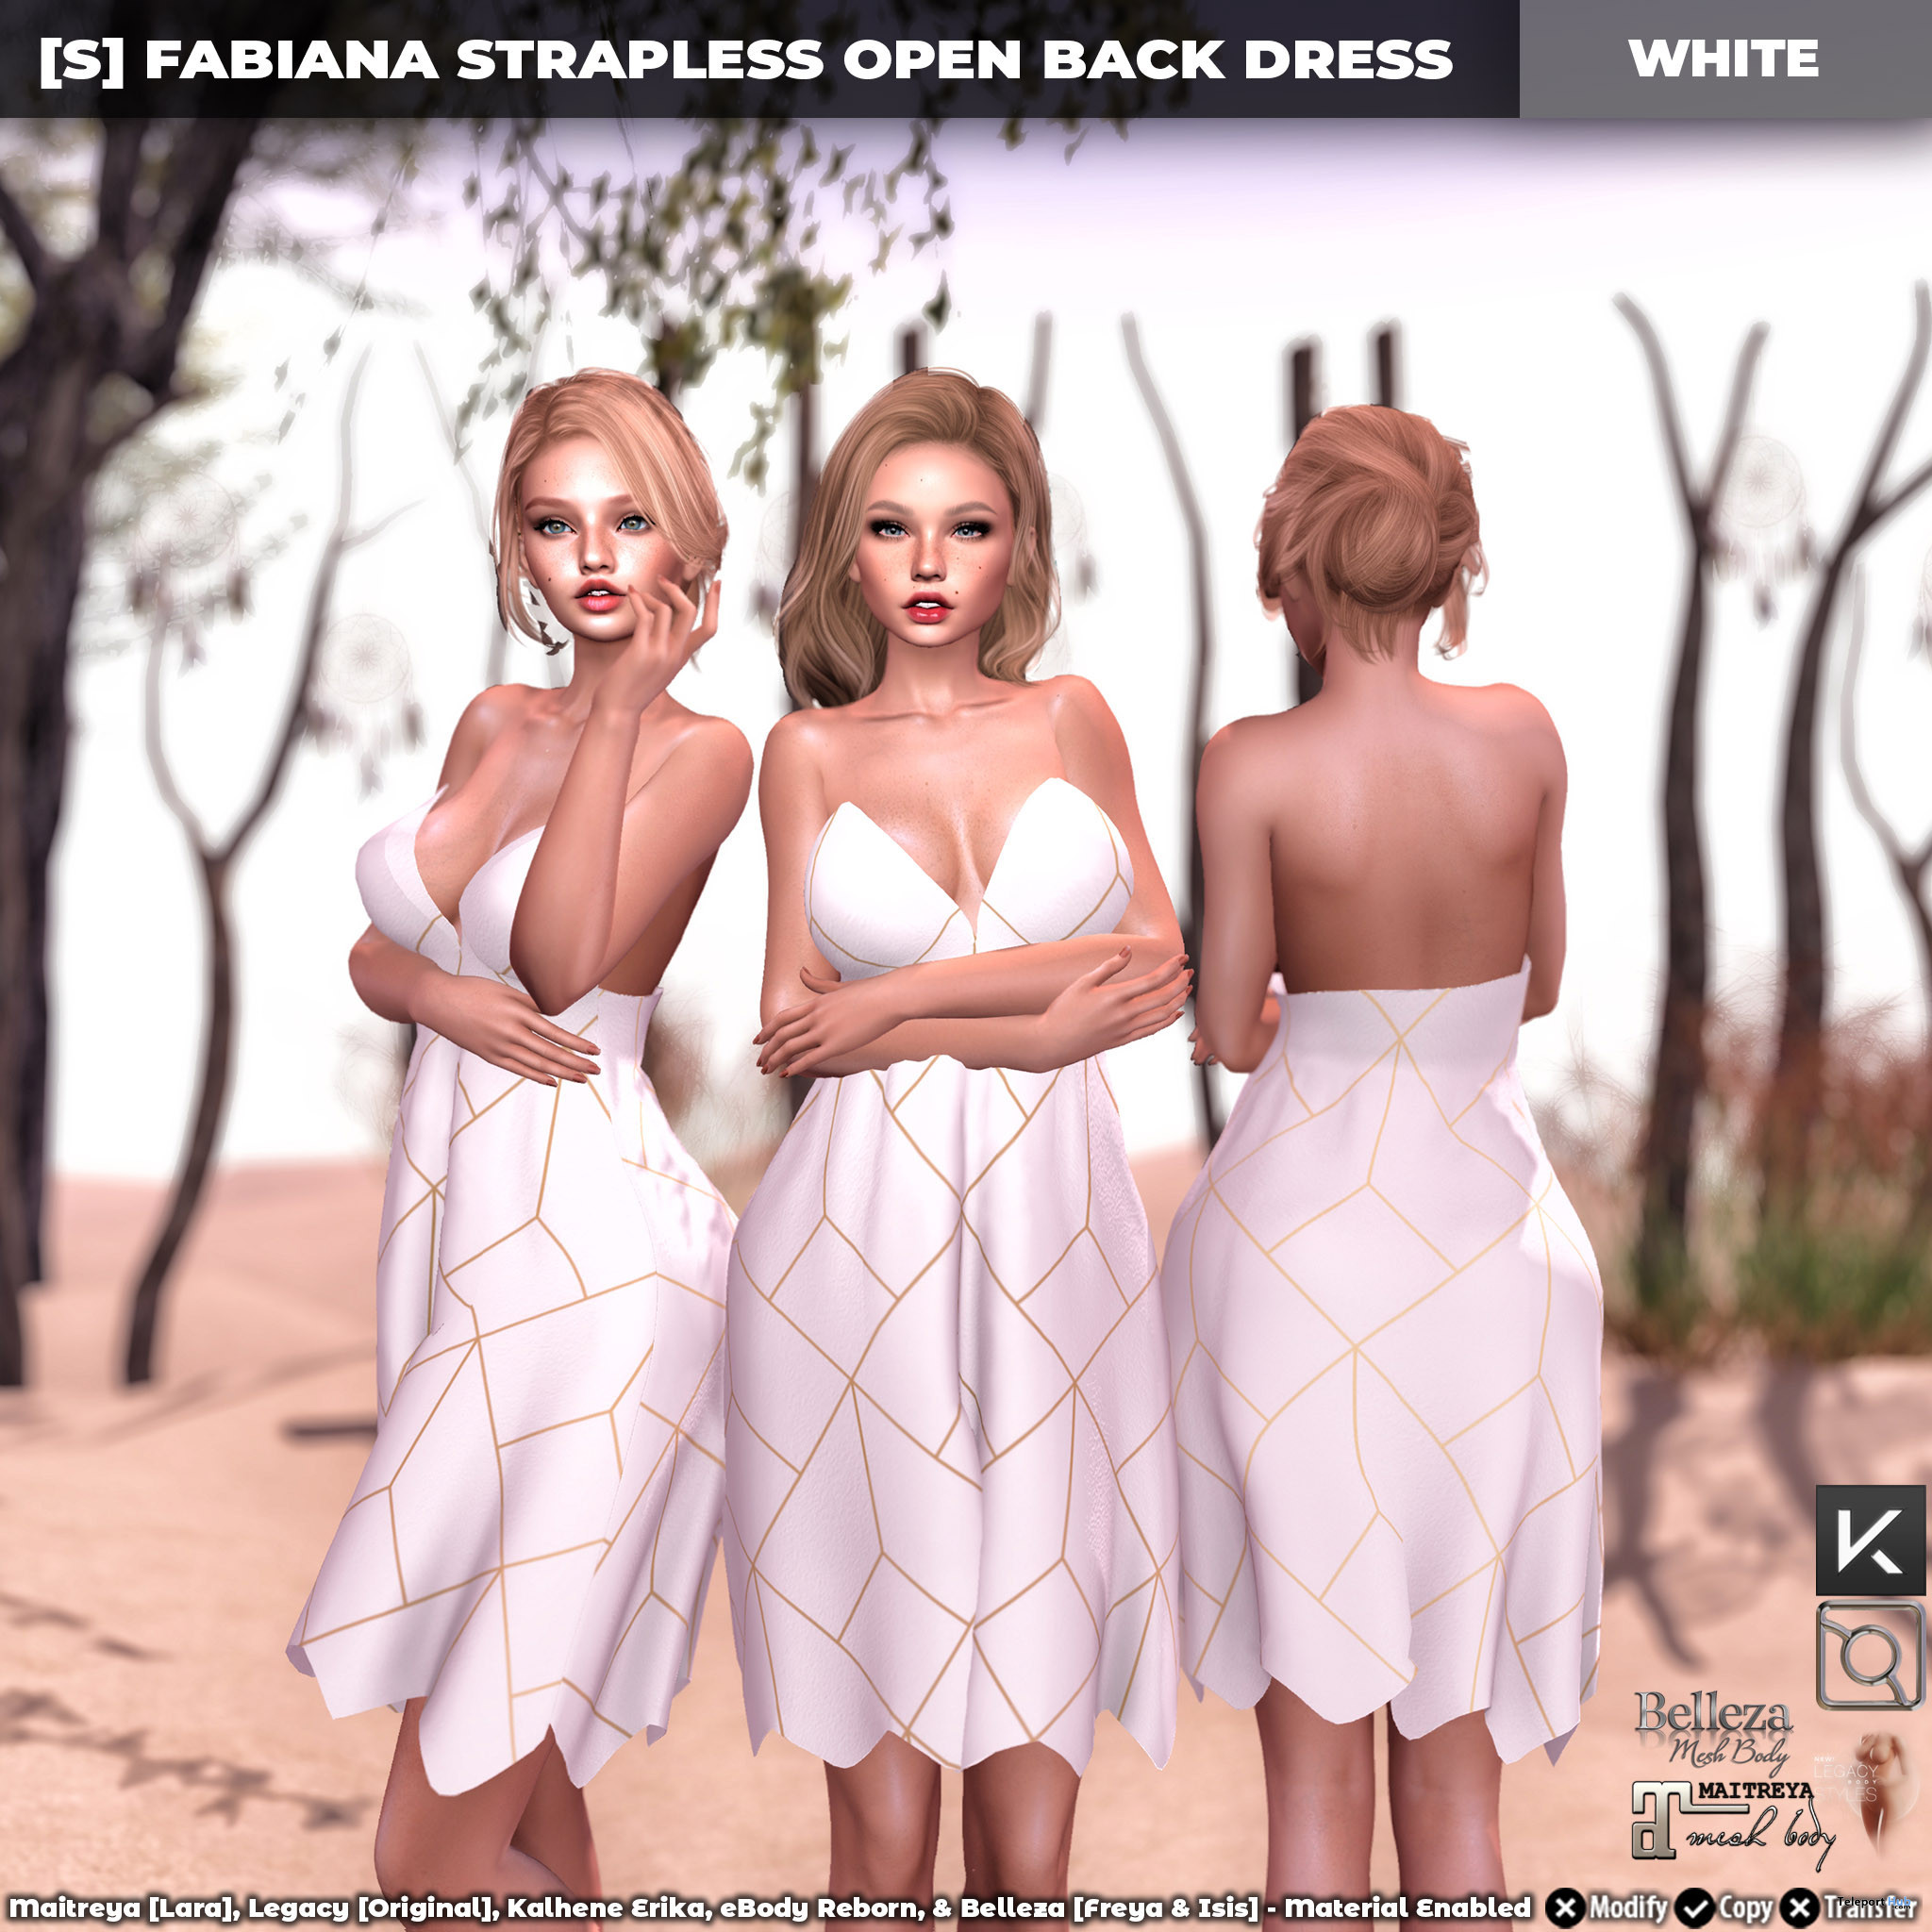 New Release: [S] Fabiana Strapless Open Back Dress by [satus Inc] - Teleport Hub - teleporthub.com